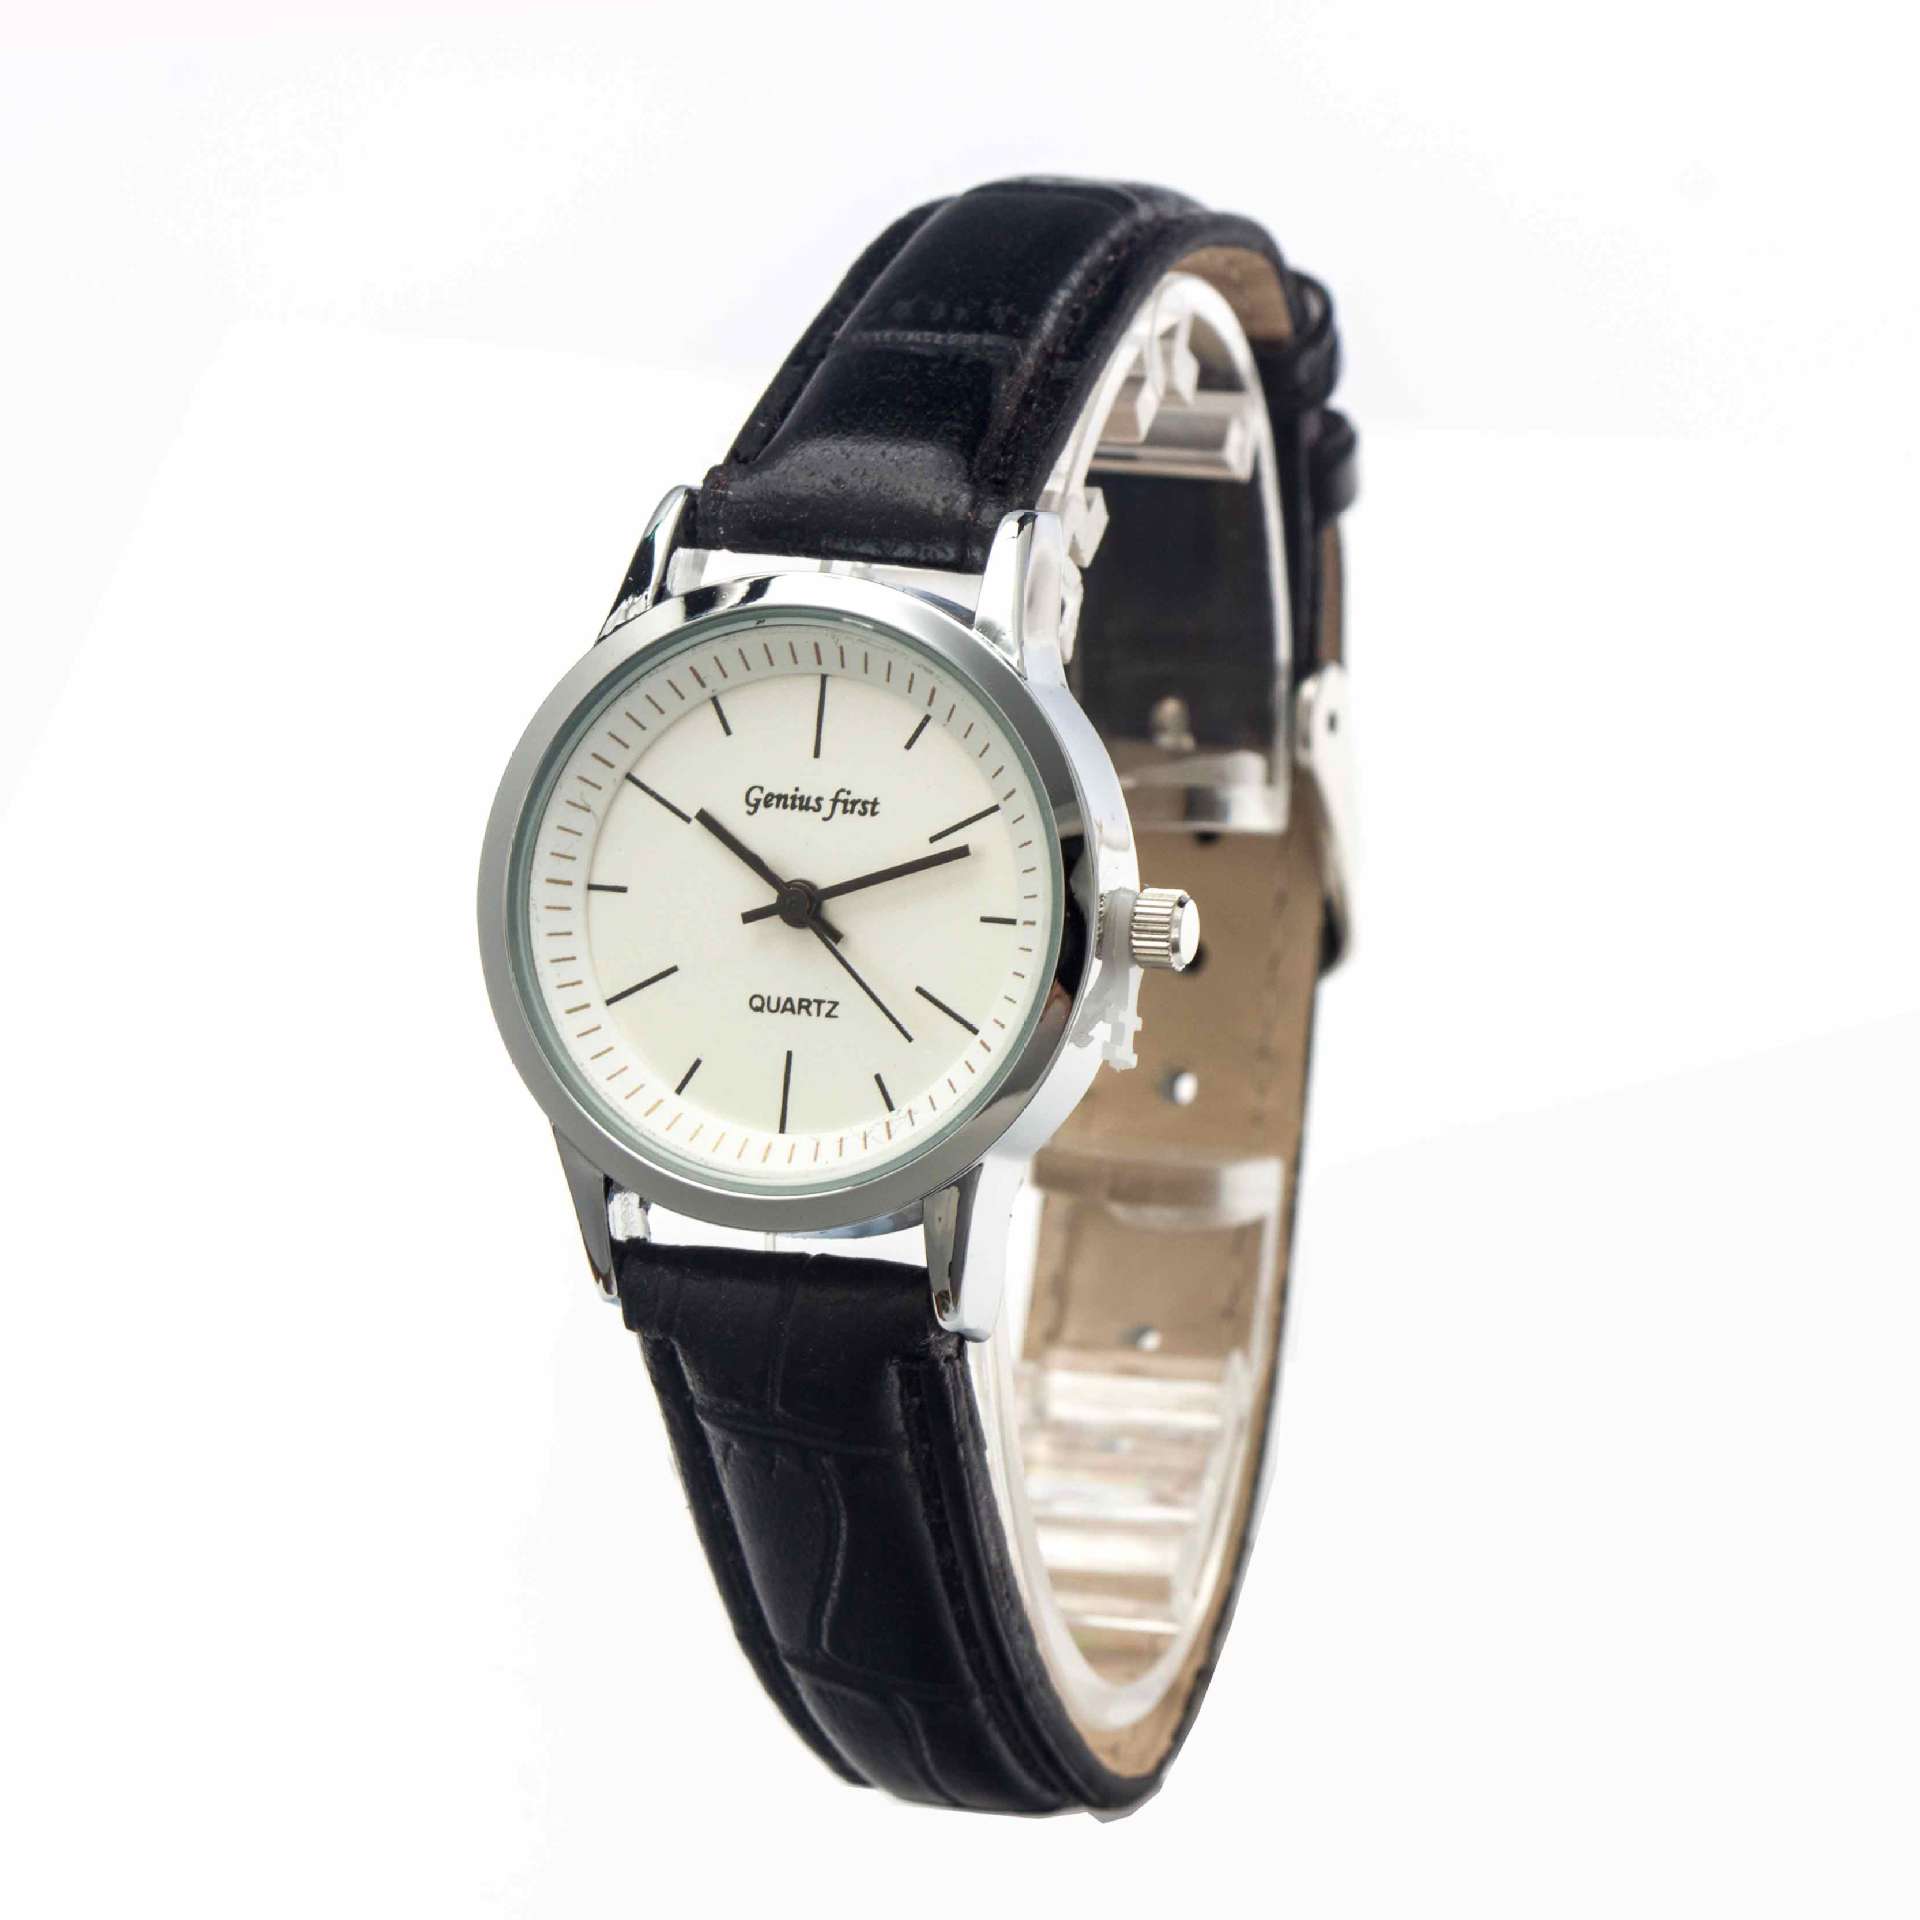 Cross-Border Couple Watch Fashion Belt Student Watch Business Men's Watch Quartz Watch Female Watches Wholesale